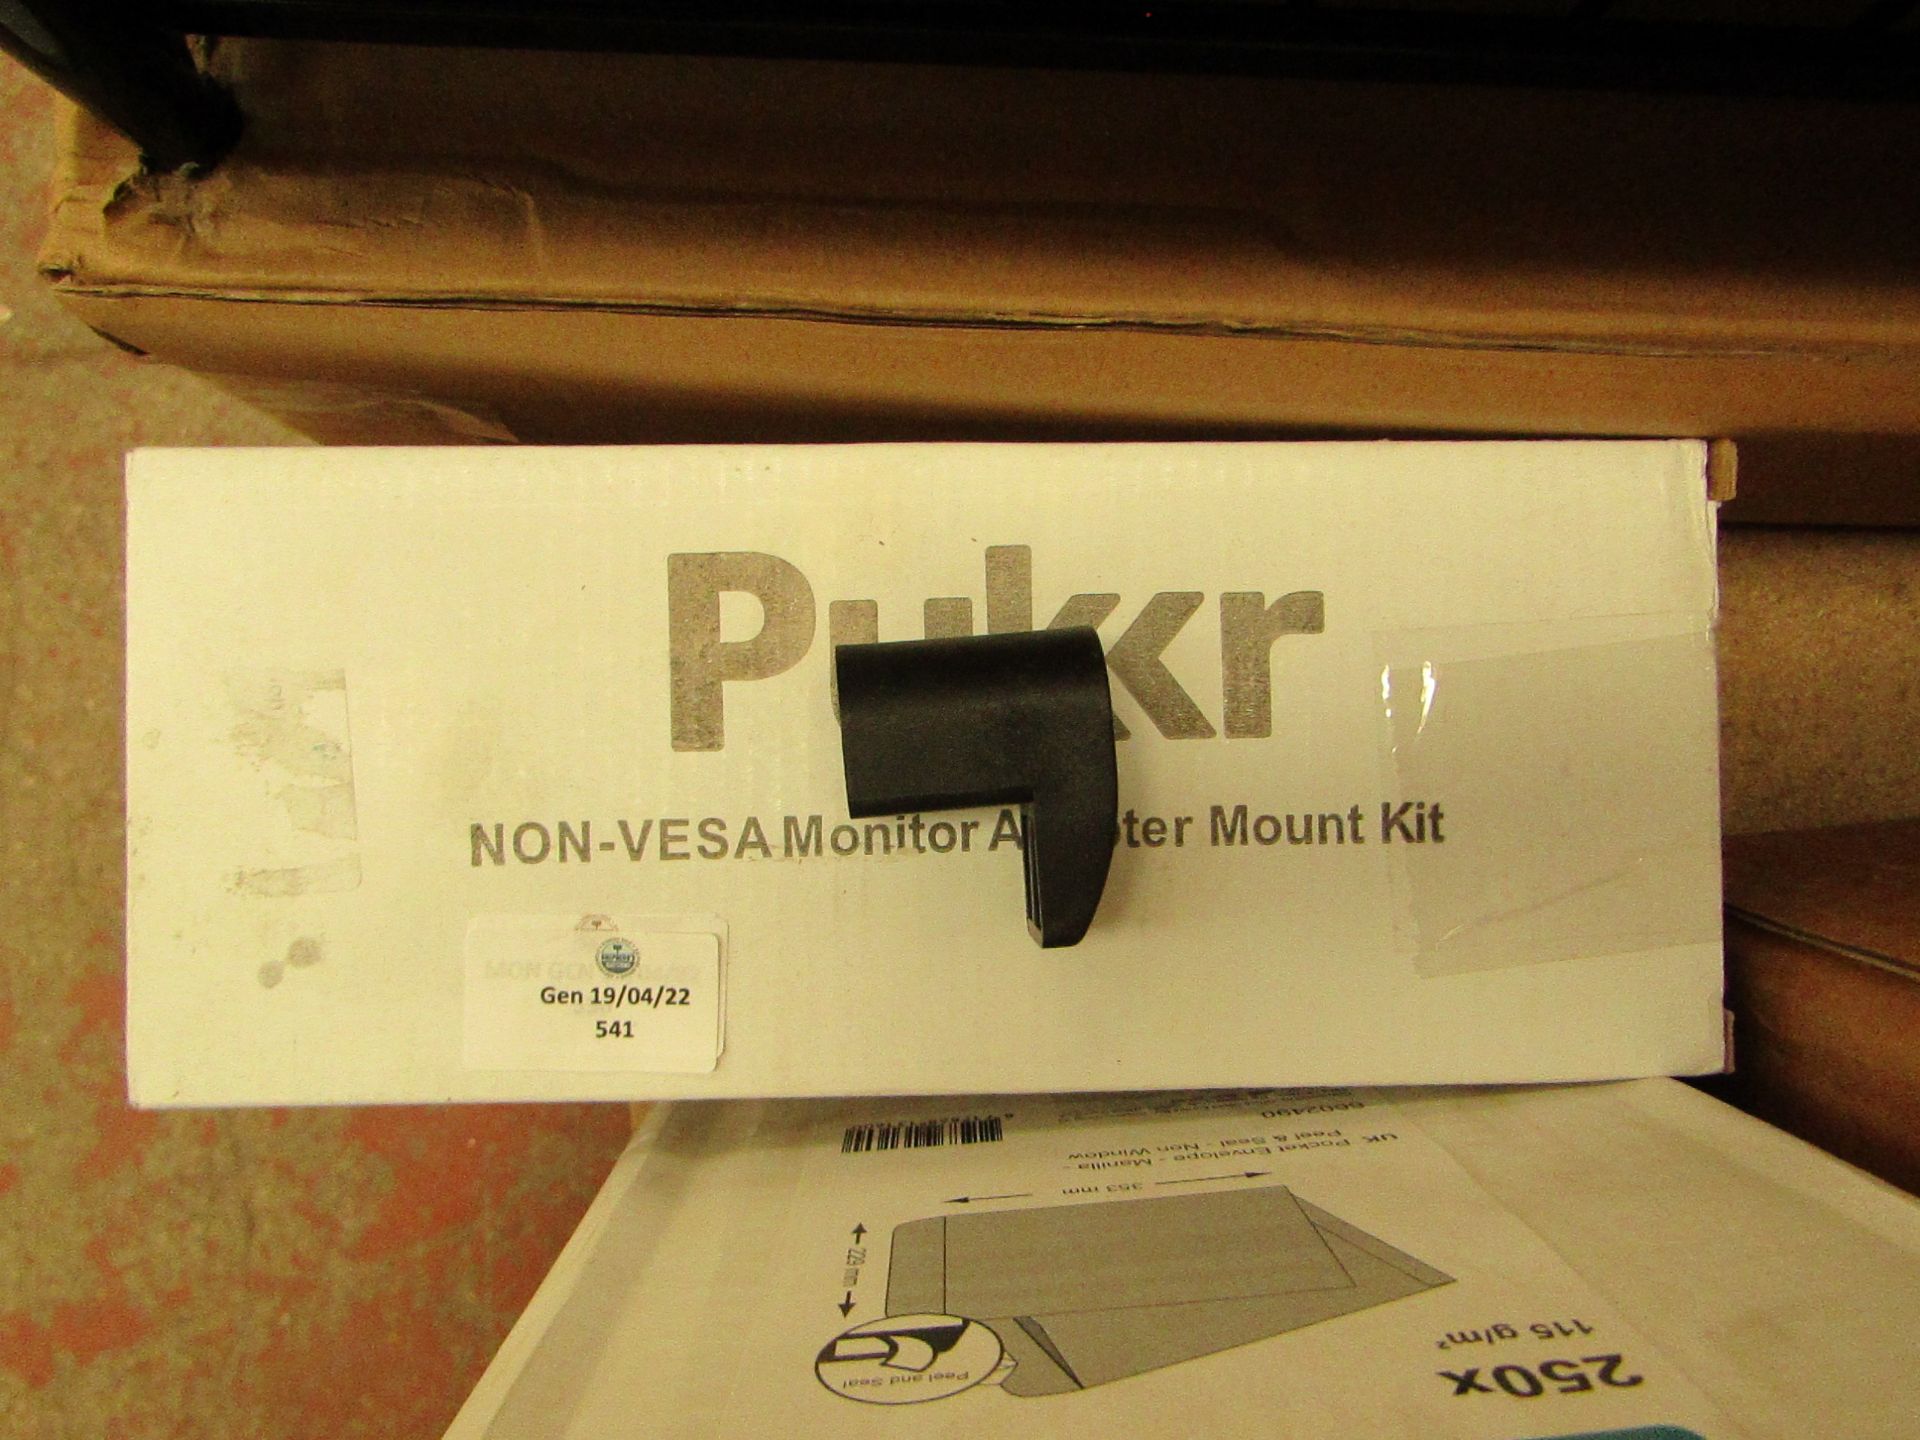 2x Pukkr - NONO-VESA Monitor Adapter Mount Kit - Unchecked & Boxed.